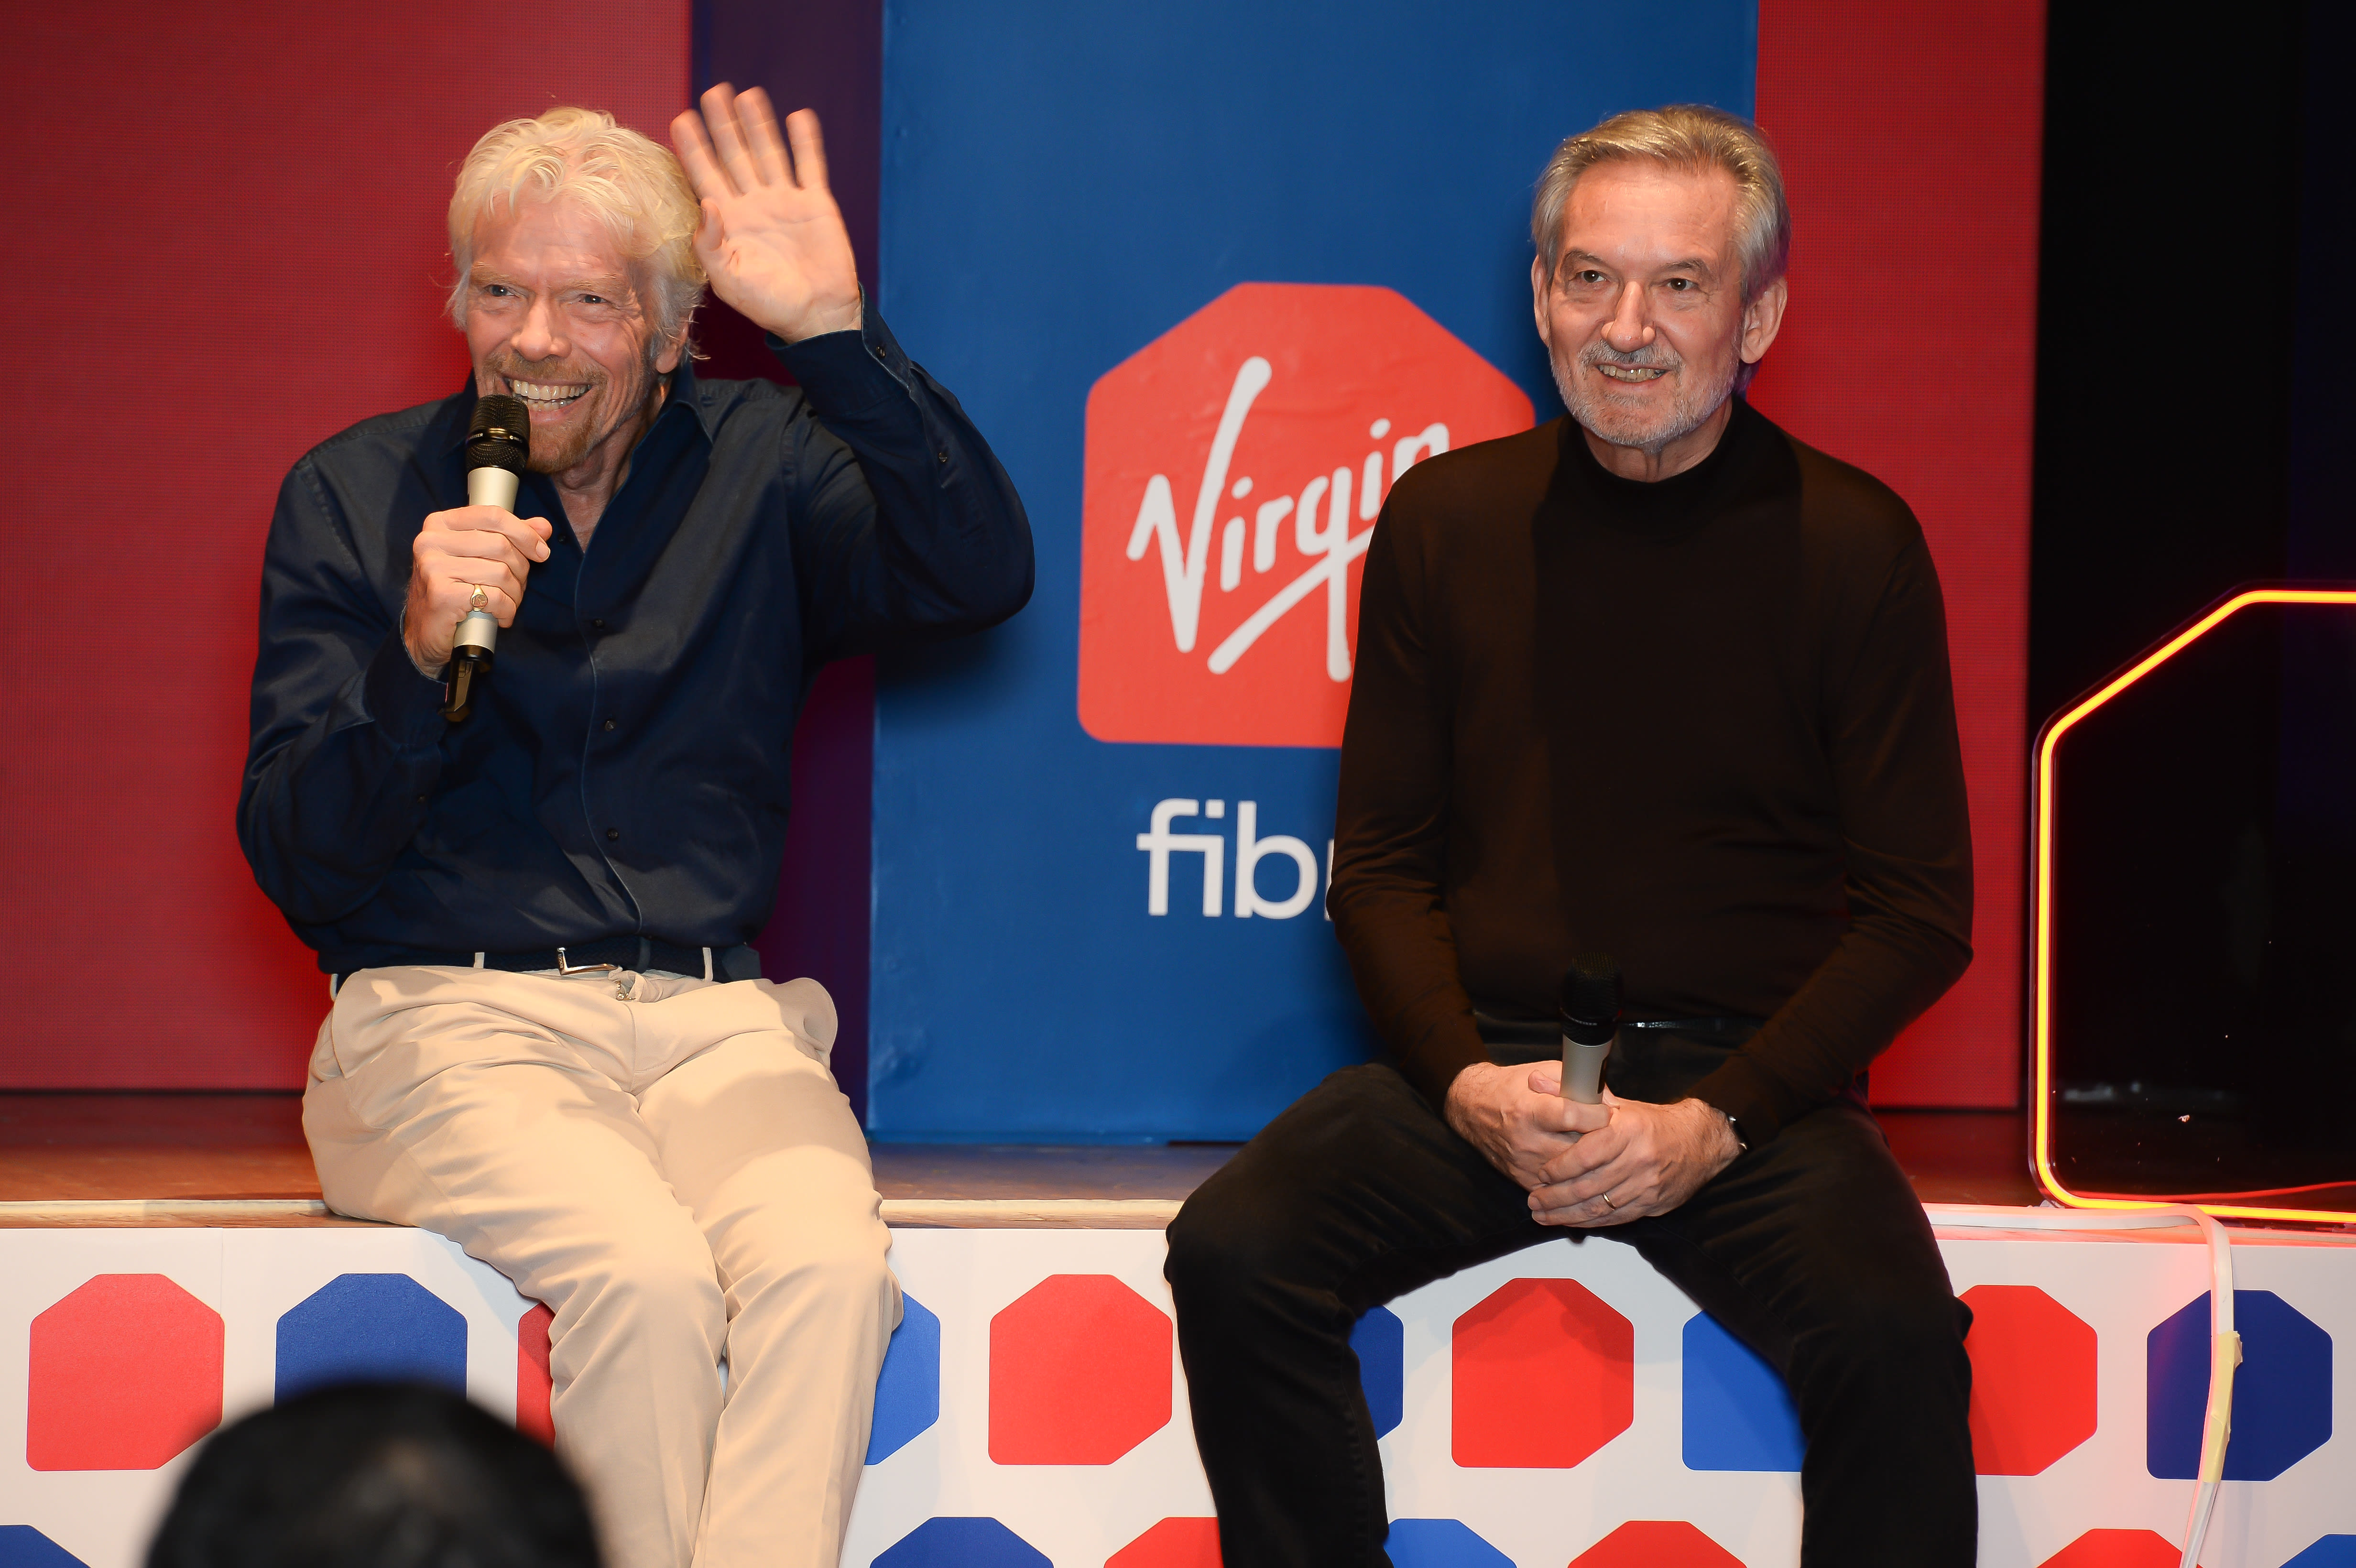 Richard Branson with Tom Mockridge at the Virgin Fibra launch